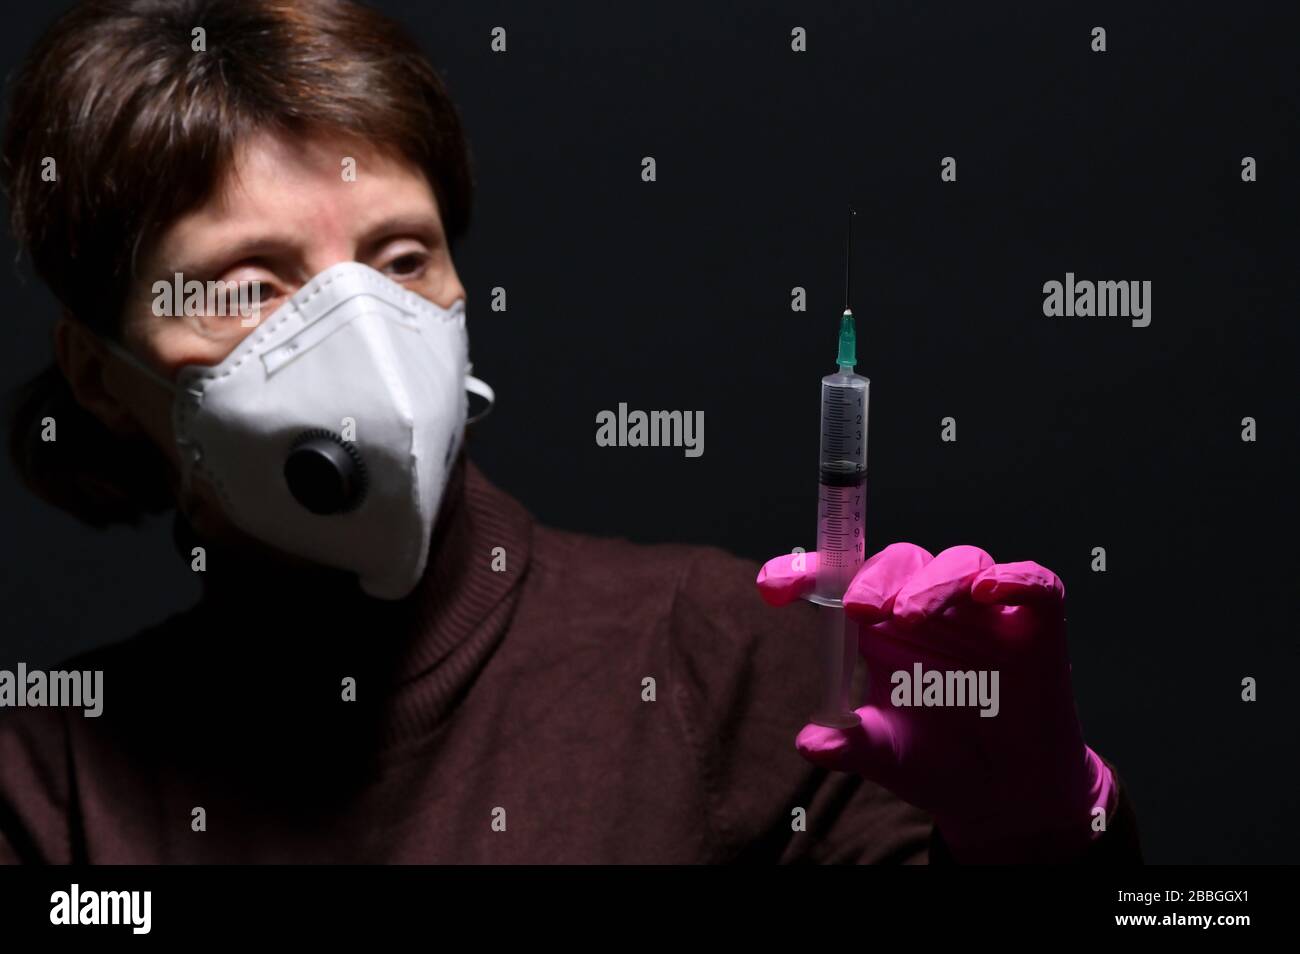 Woman Wearing Medical Protective Virus Mask and Syringe Stock Photo